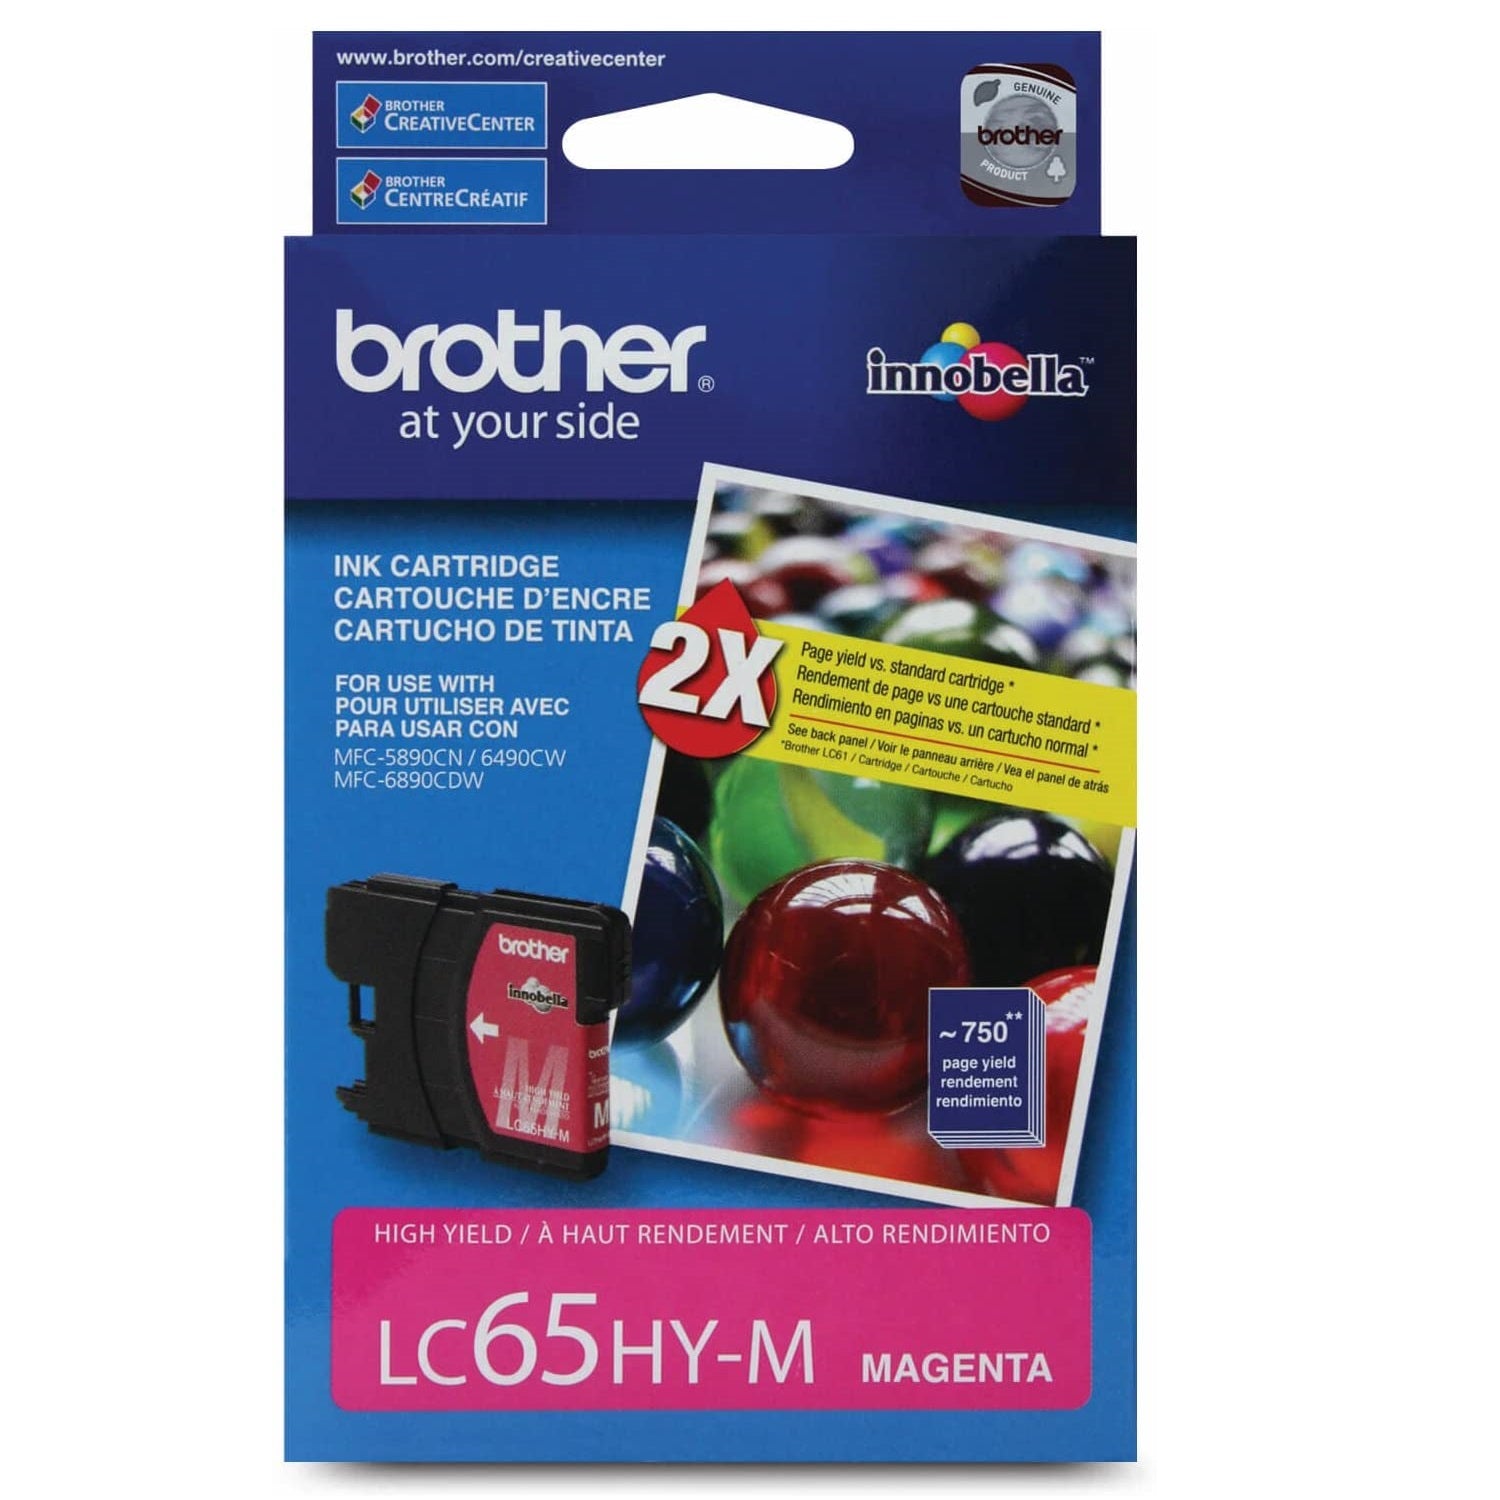 Absolute Toner Brother Genuine OEM LC65HYMS High Yield Magenta Ink Cartridge Original Brother Cartridges